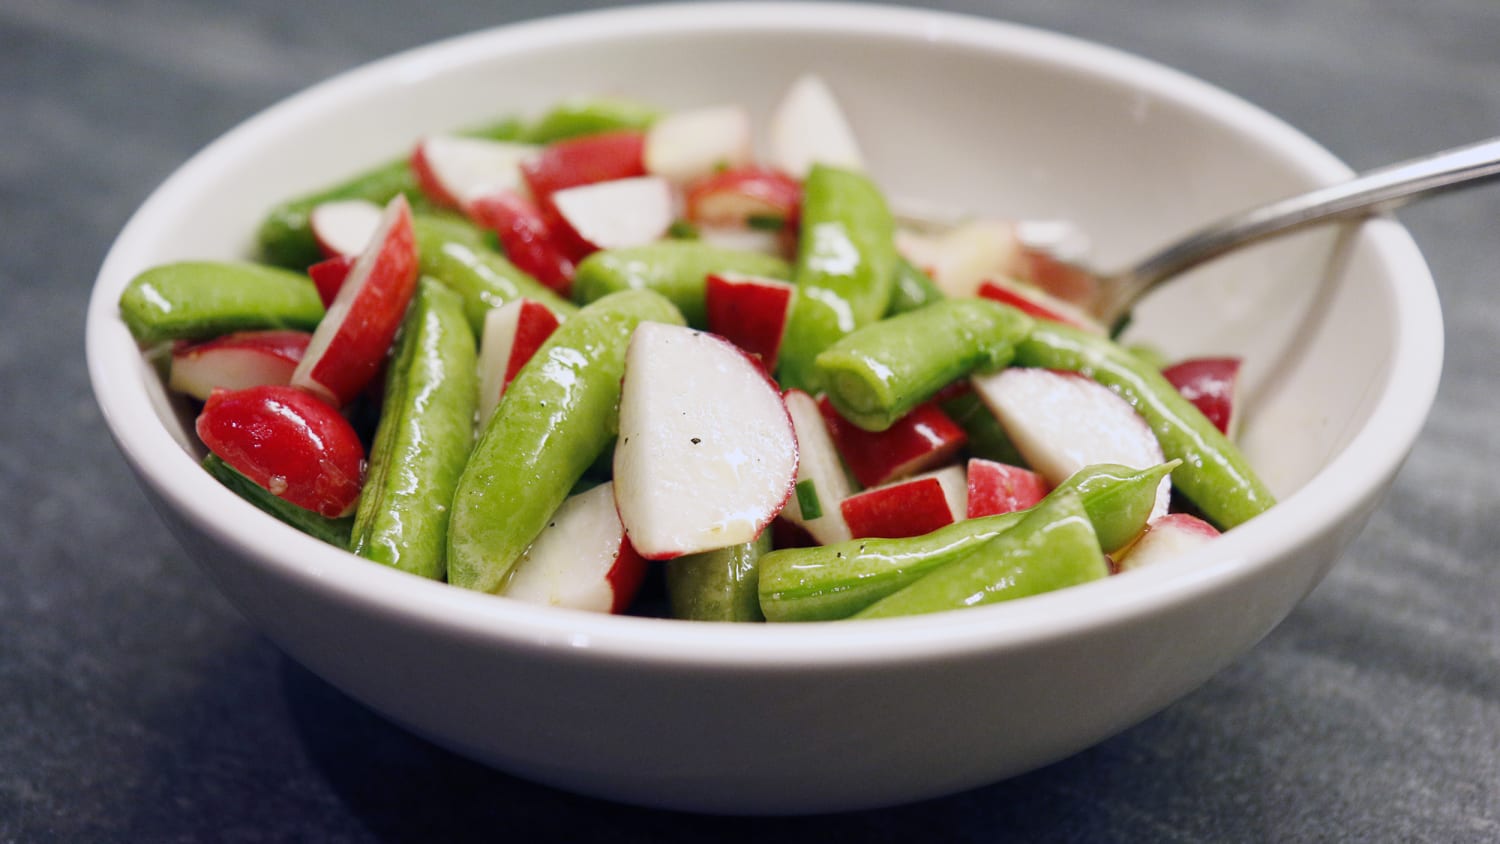 https://media-cldnry.s-nbcnews.com/image/upload/newscms/2017_31/1269908/sugar-snap-pea-radish-salad-today-170803-tease.jpg